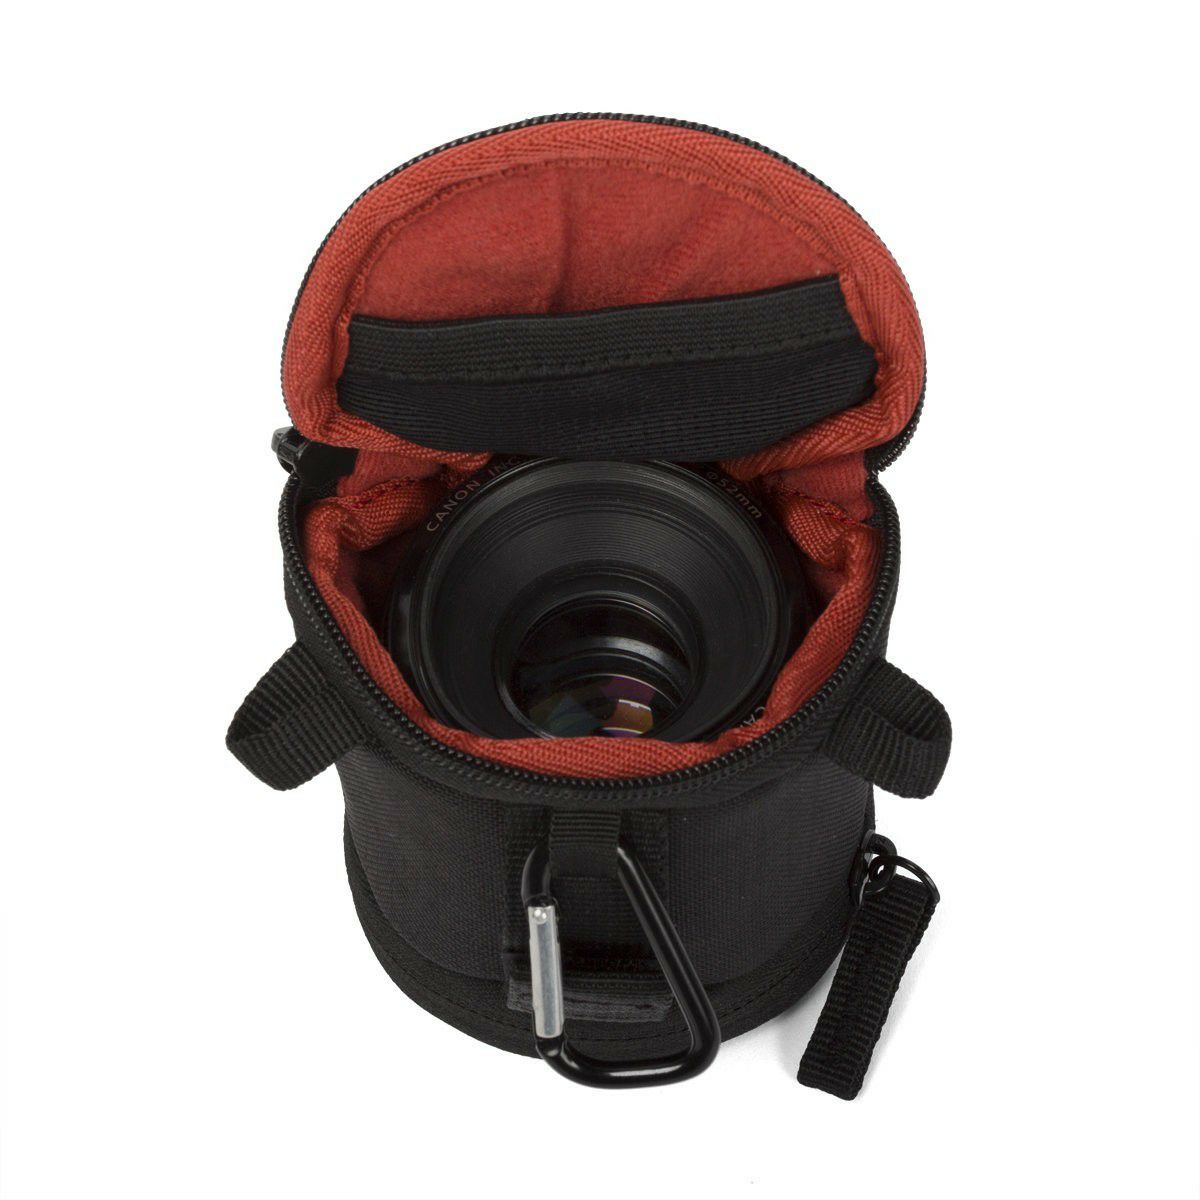 Crumpler Base Layer Lens Case S black rusted red (BLLC-S-001) crna hrđavo crvena torba za fotoaparat